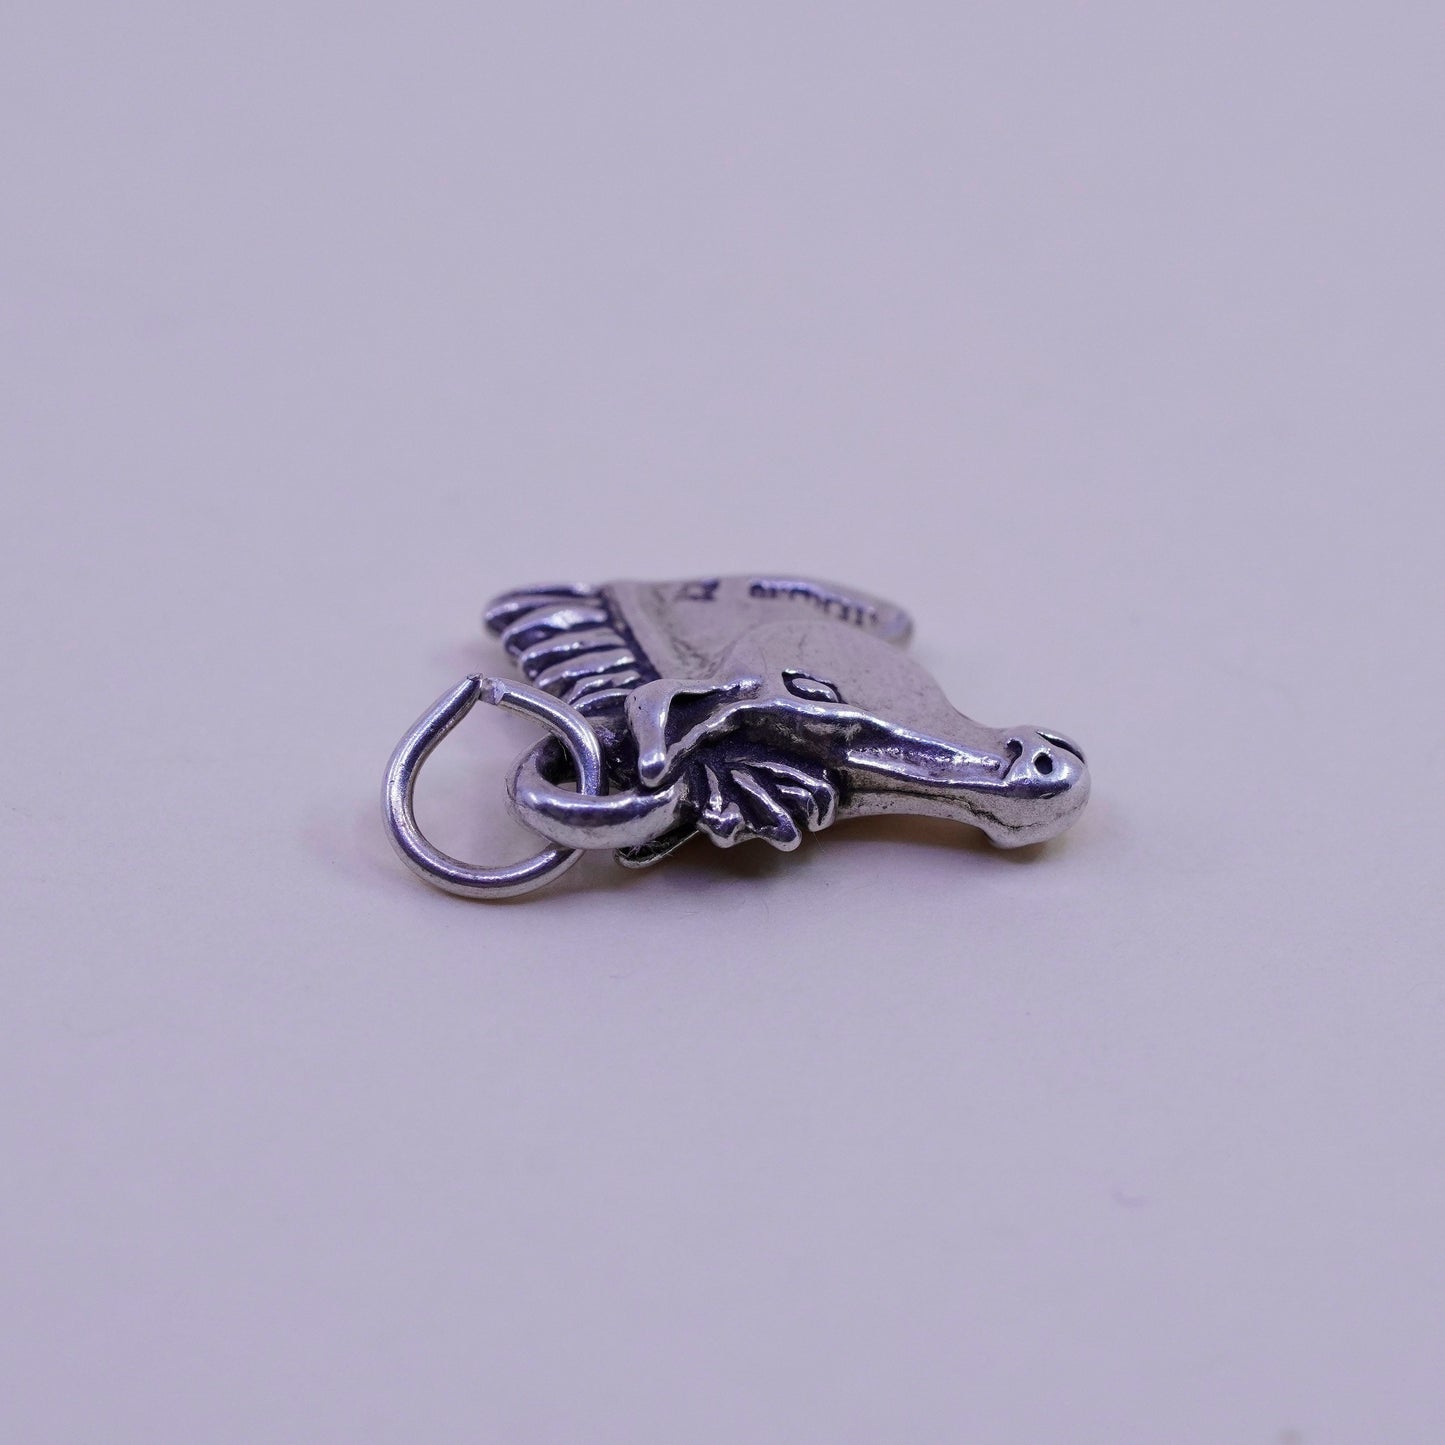 Handmade vintage Sterling silver pendant, 925 horse head charm